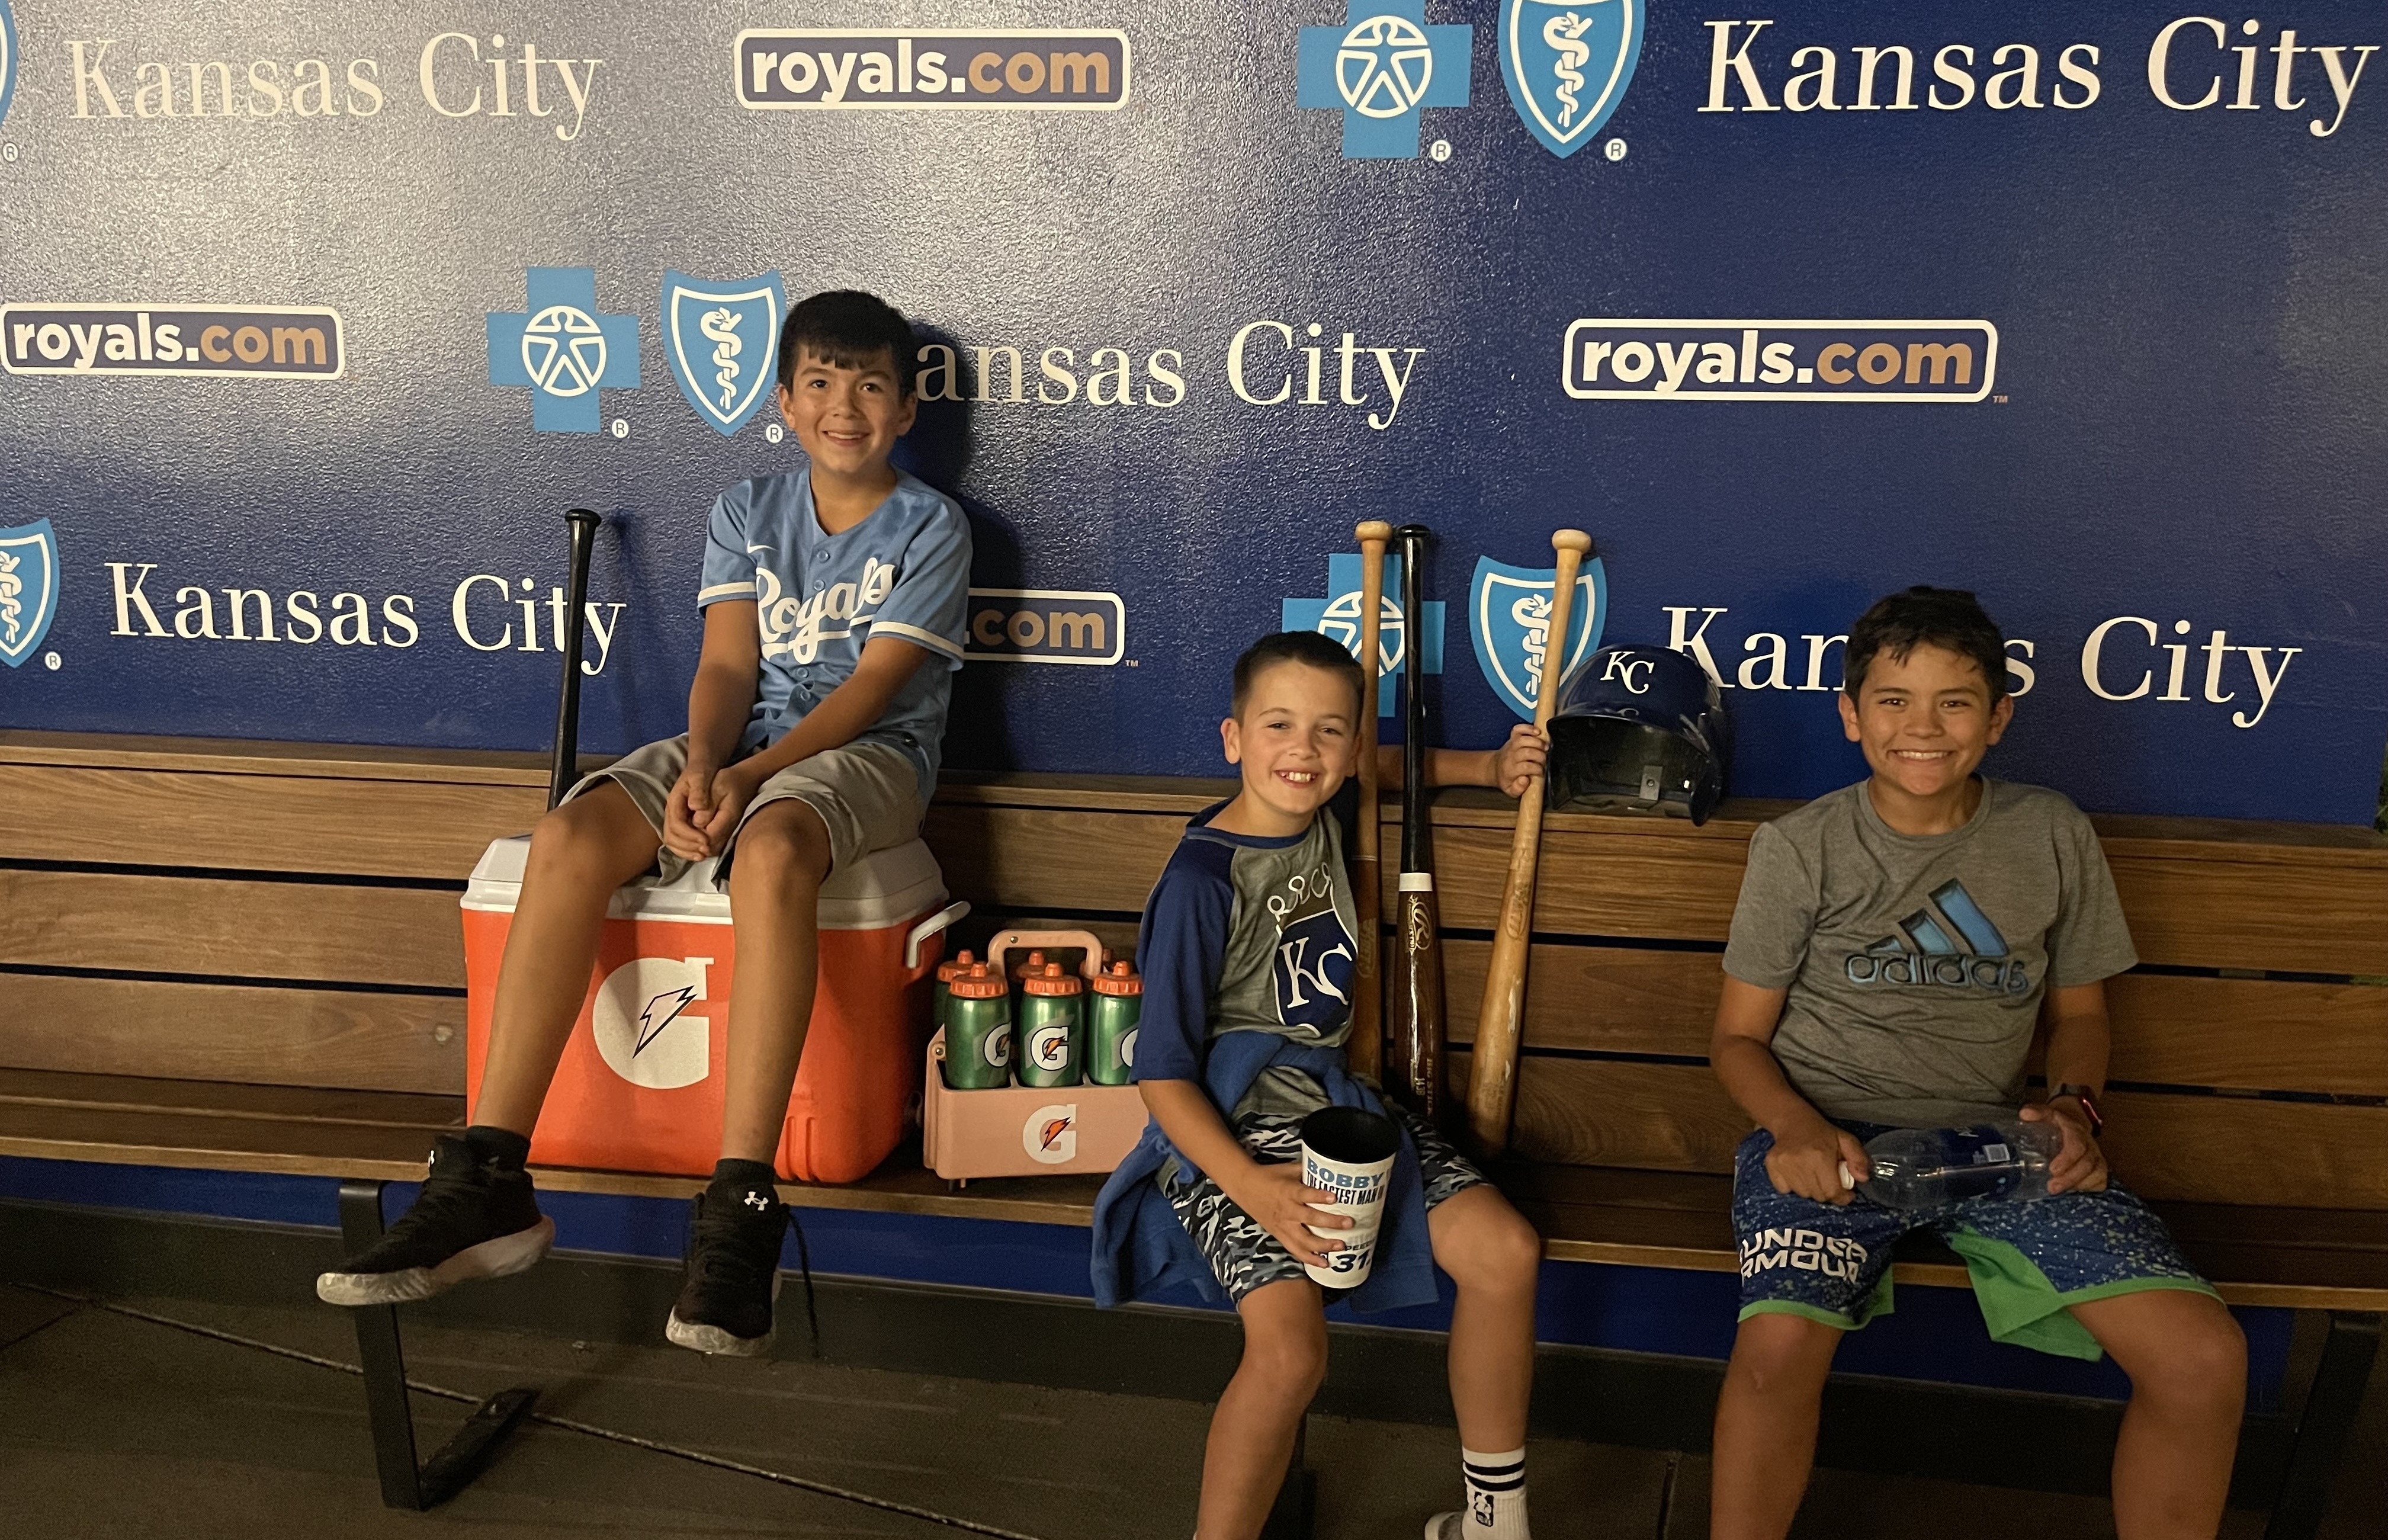 Royals Kids  Kansas City Royals